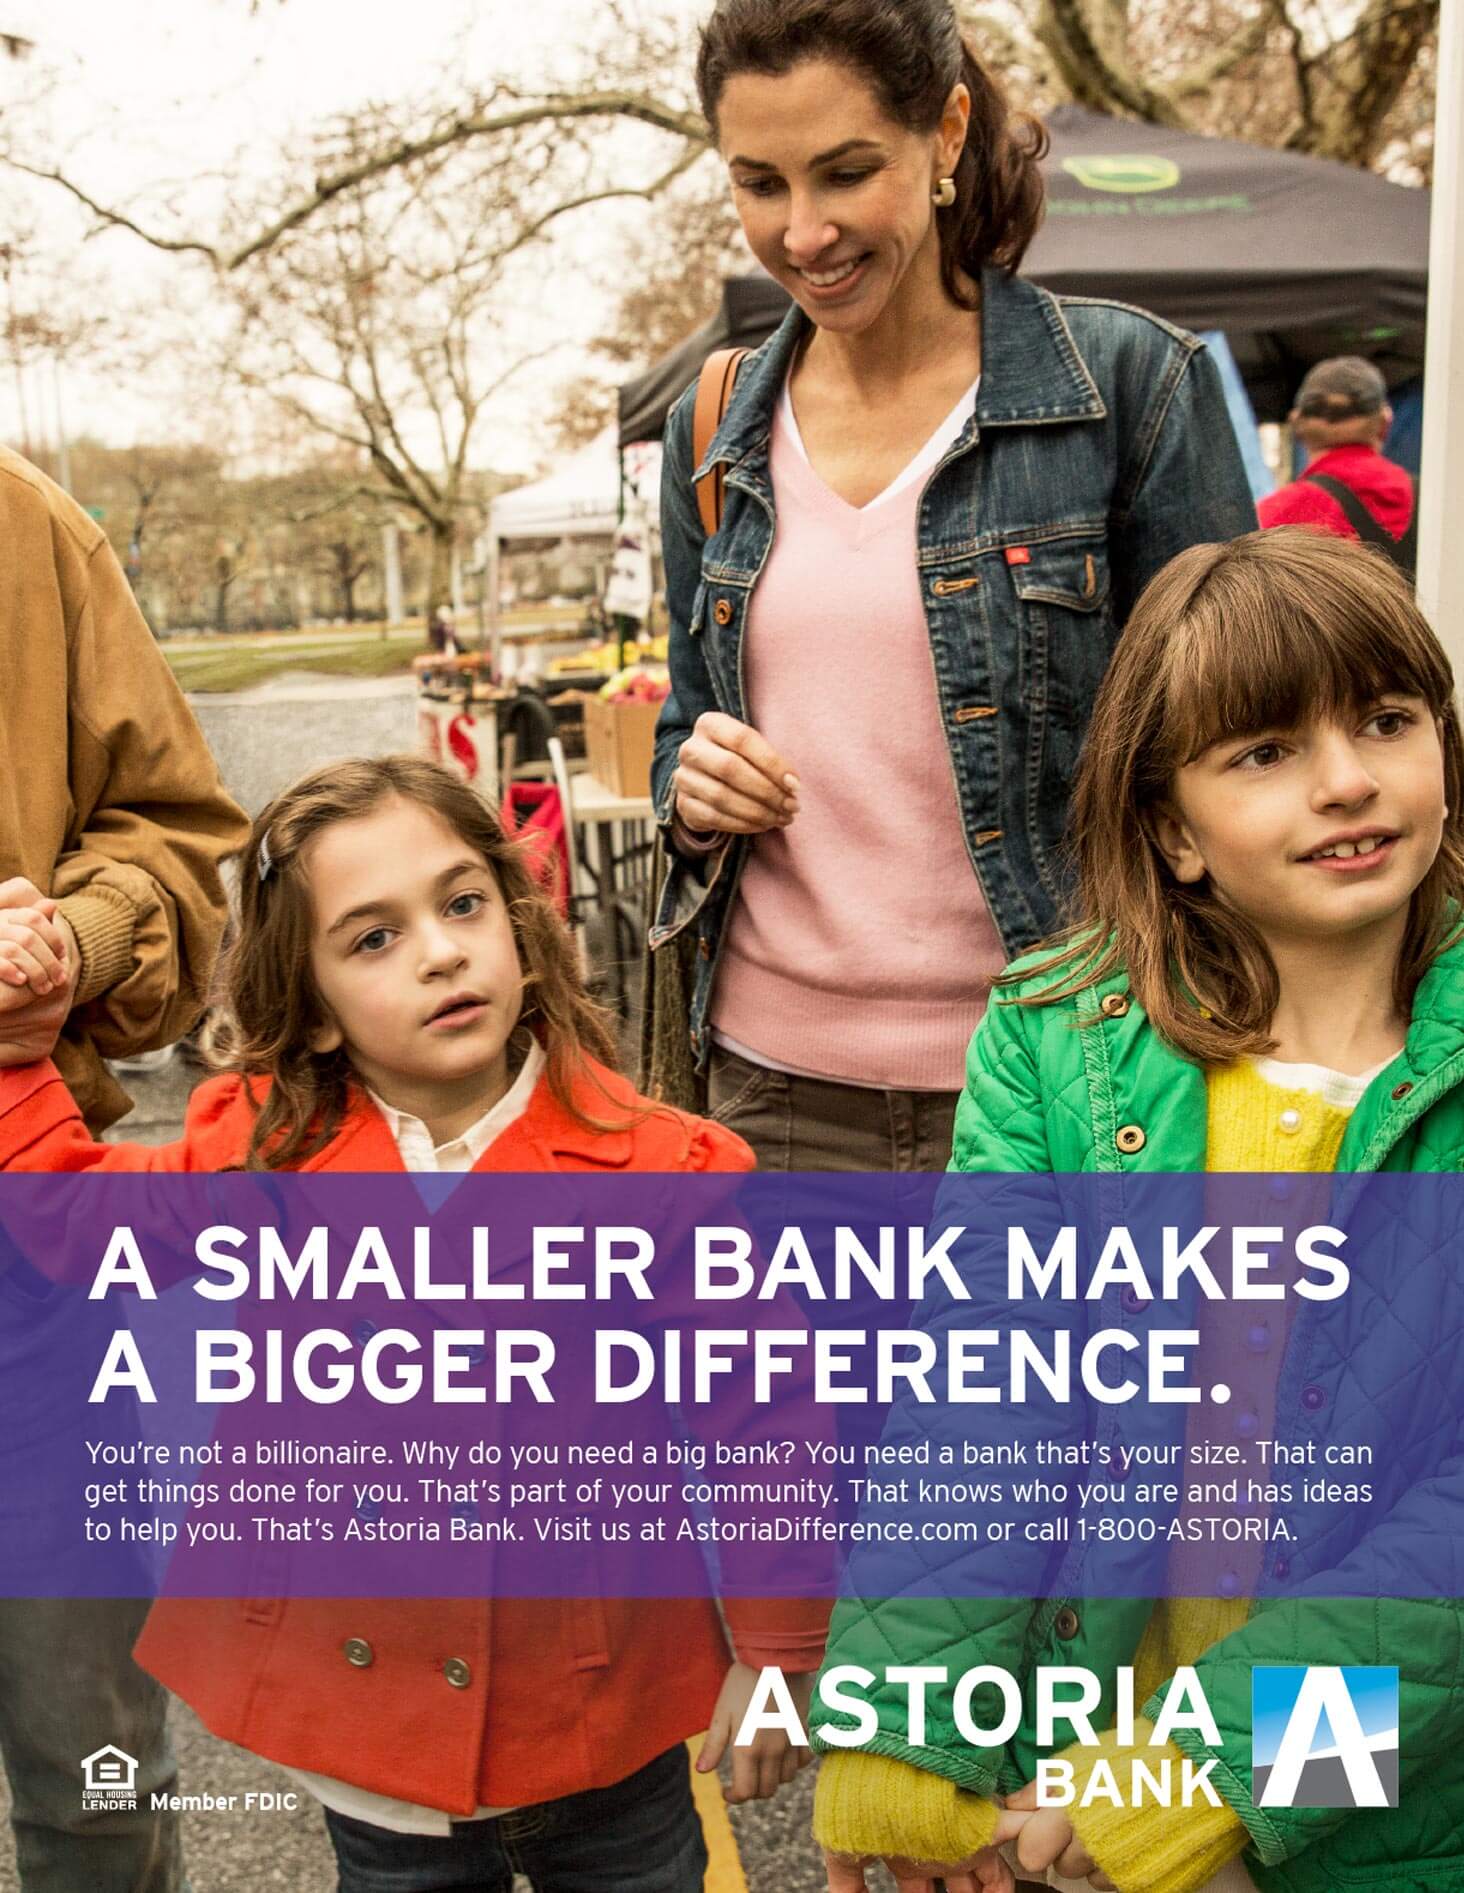 Astoria Bank. A smaller bank makes a bigger difference.